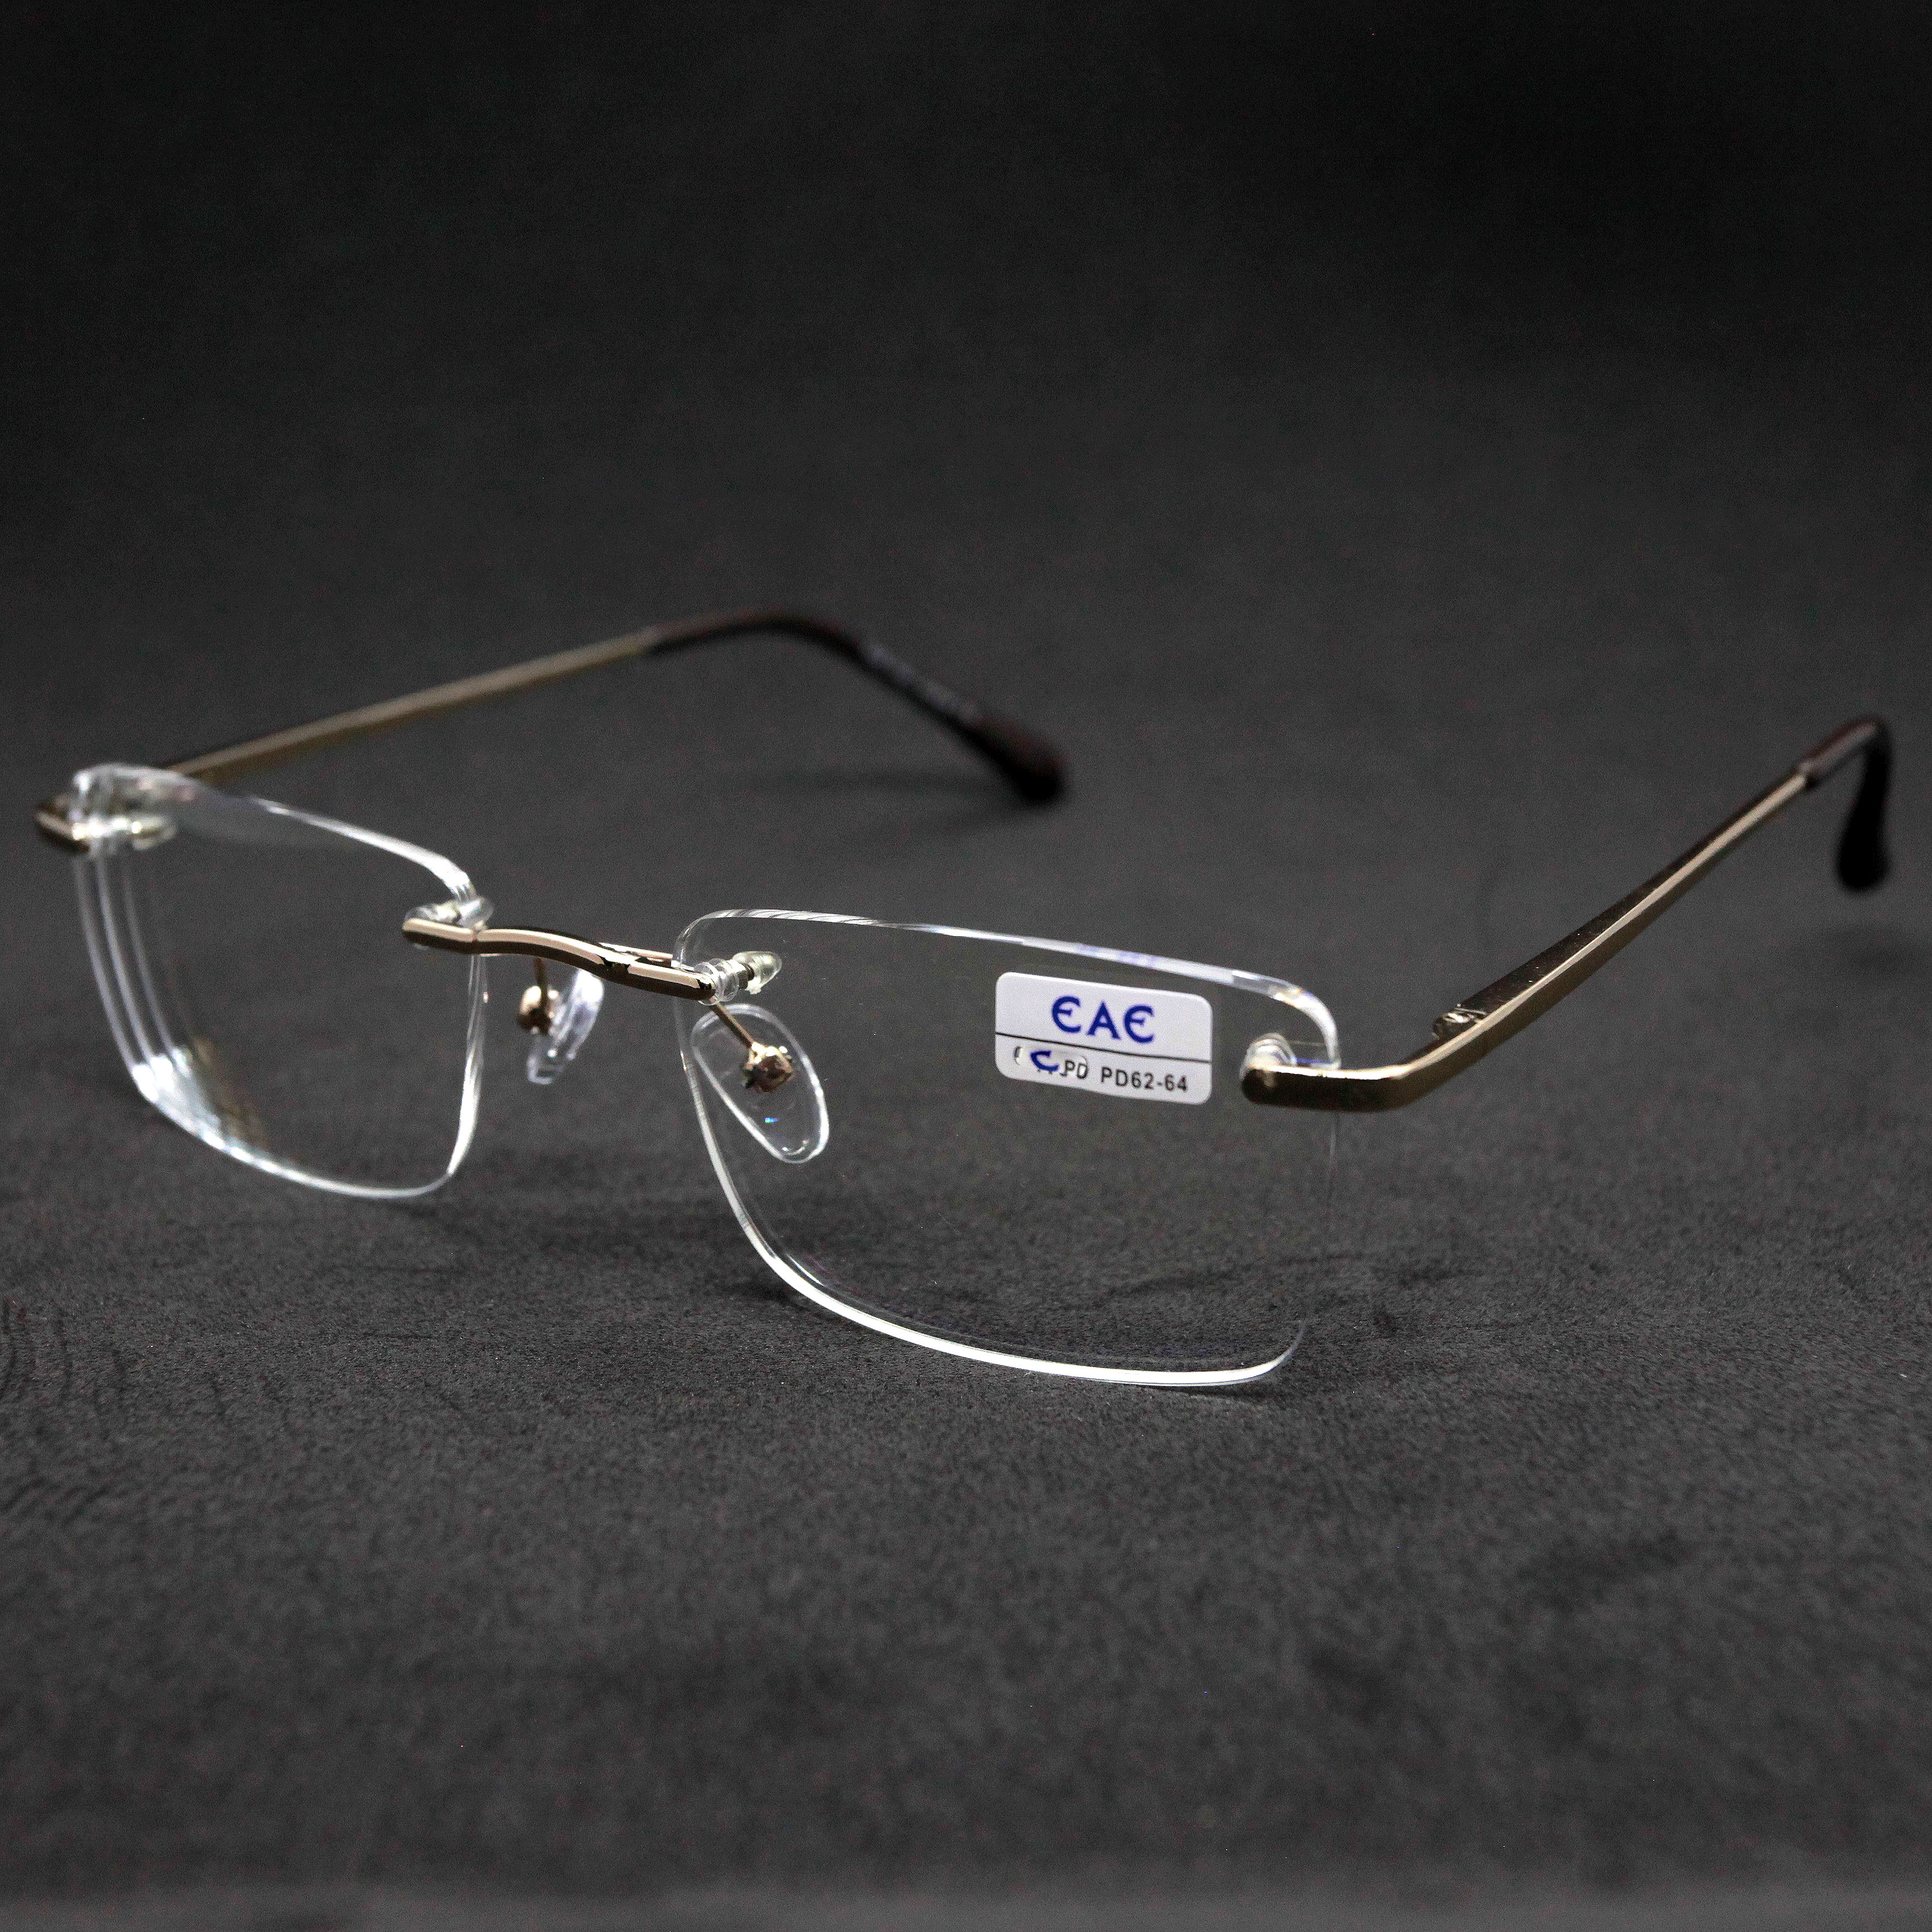 Безободковые очки EAE 1037 +2.00, без футляра, антиблик, цвет золотой, РЦ 62-64